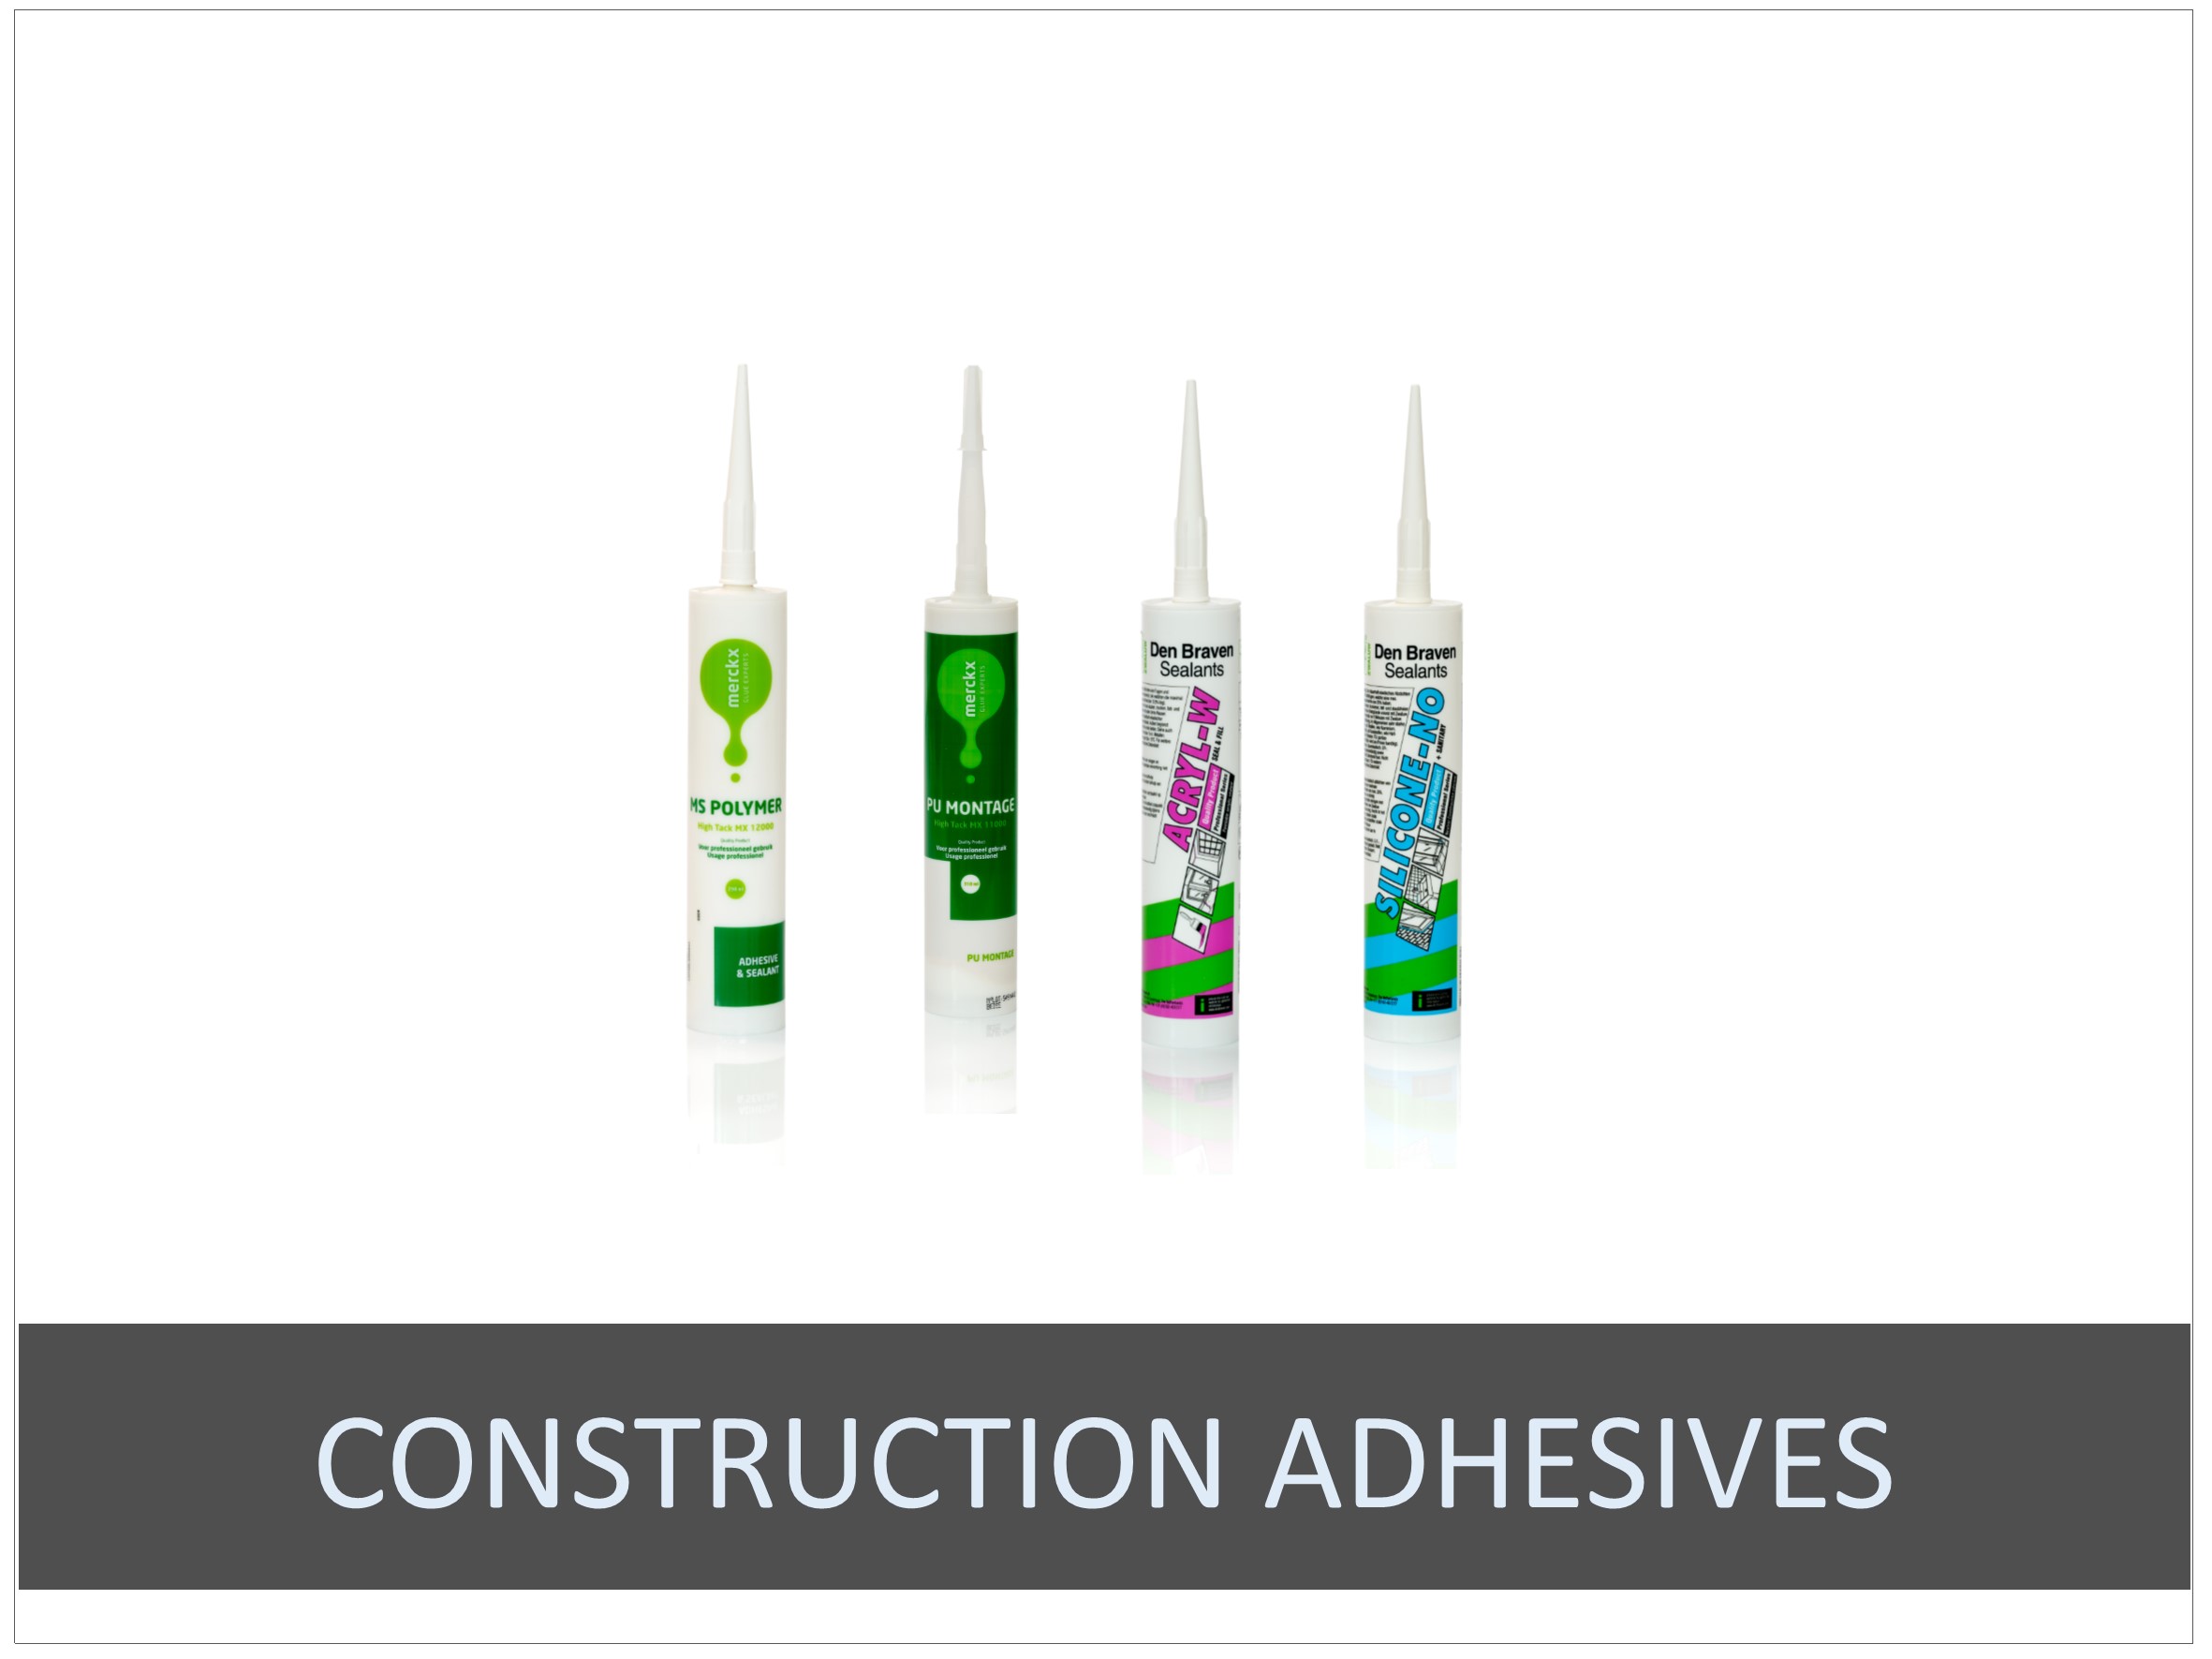 Construction adhesives